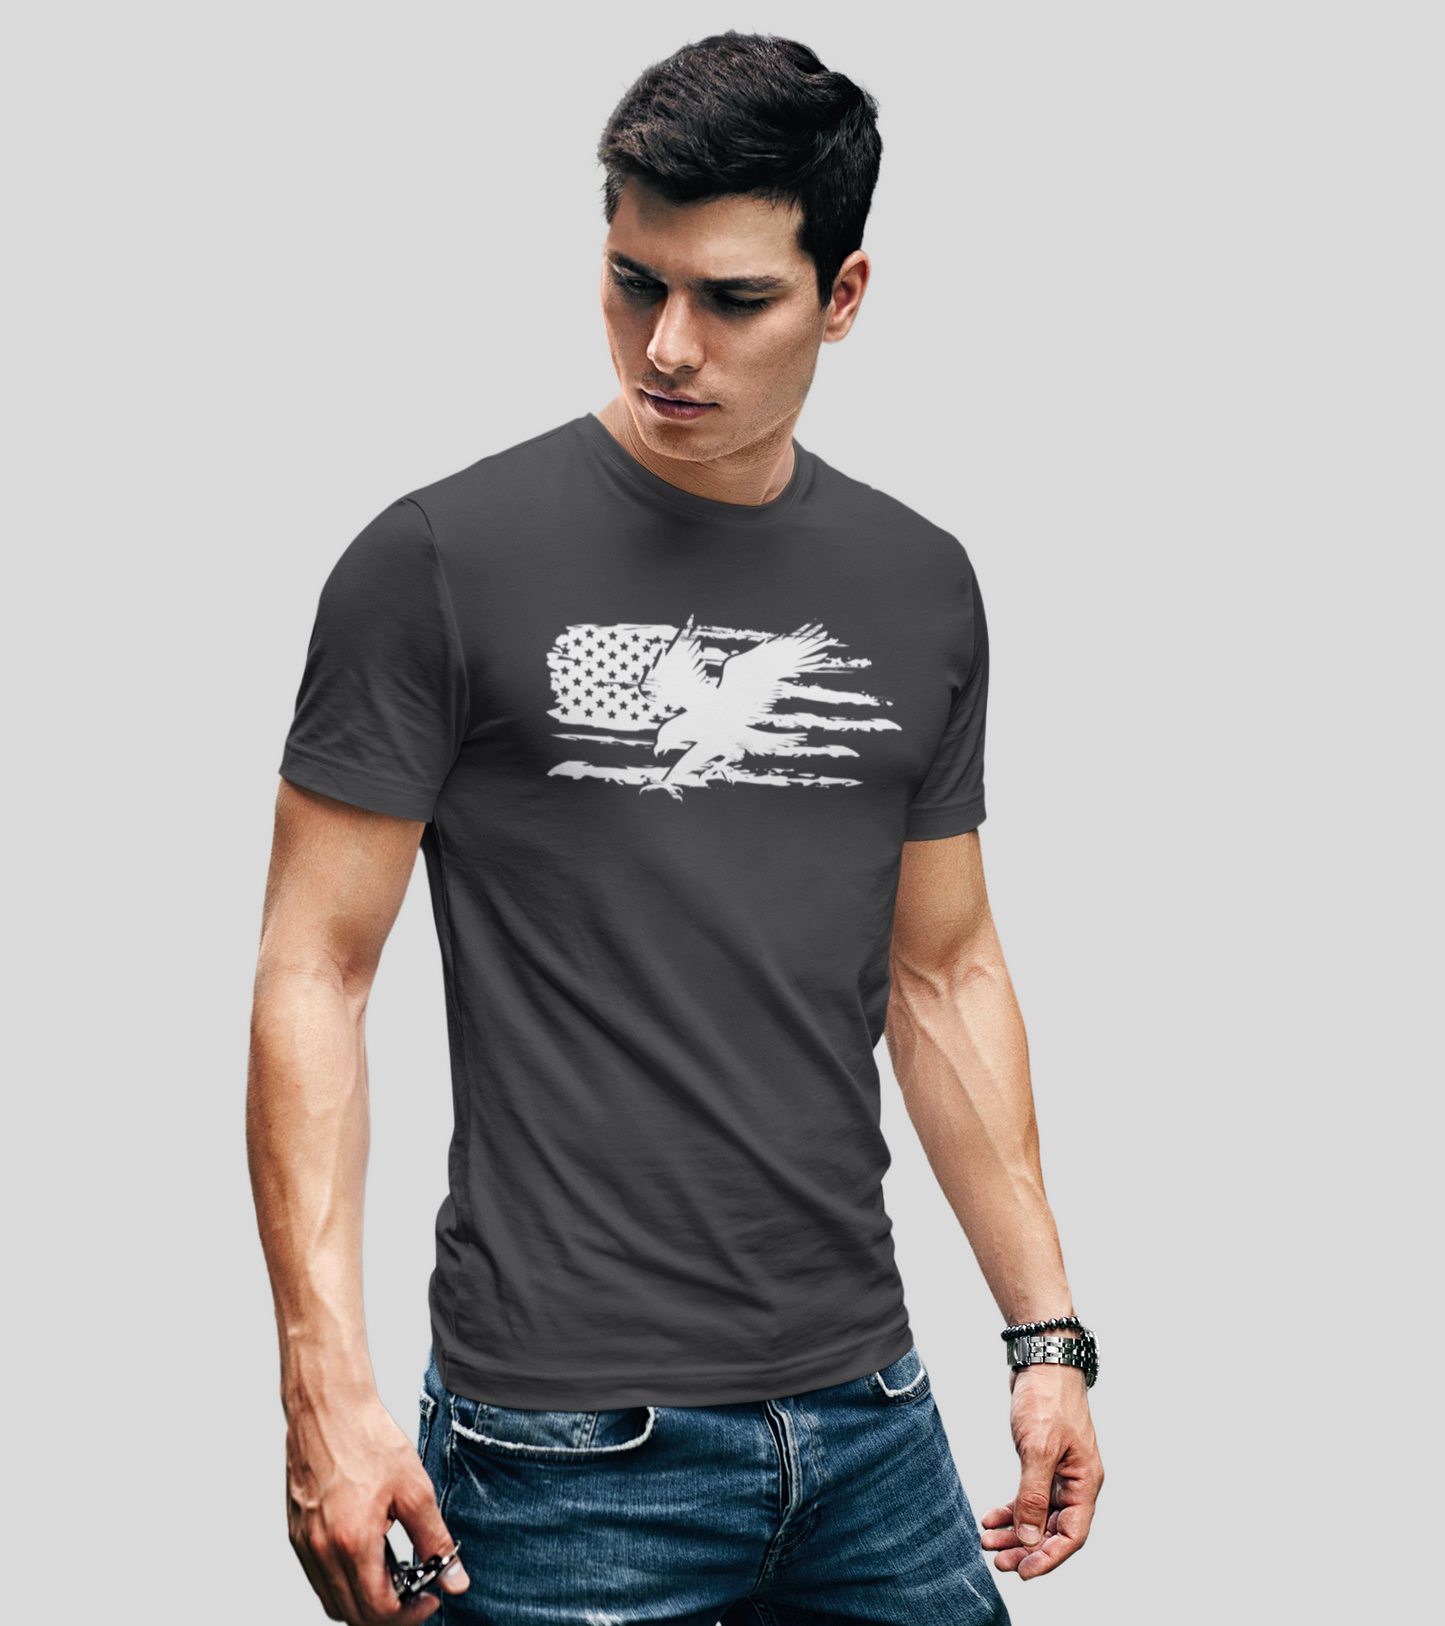 American Flag & Eagle Distressed T Shirt - Unisex